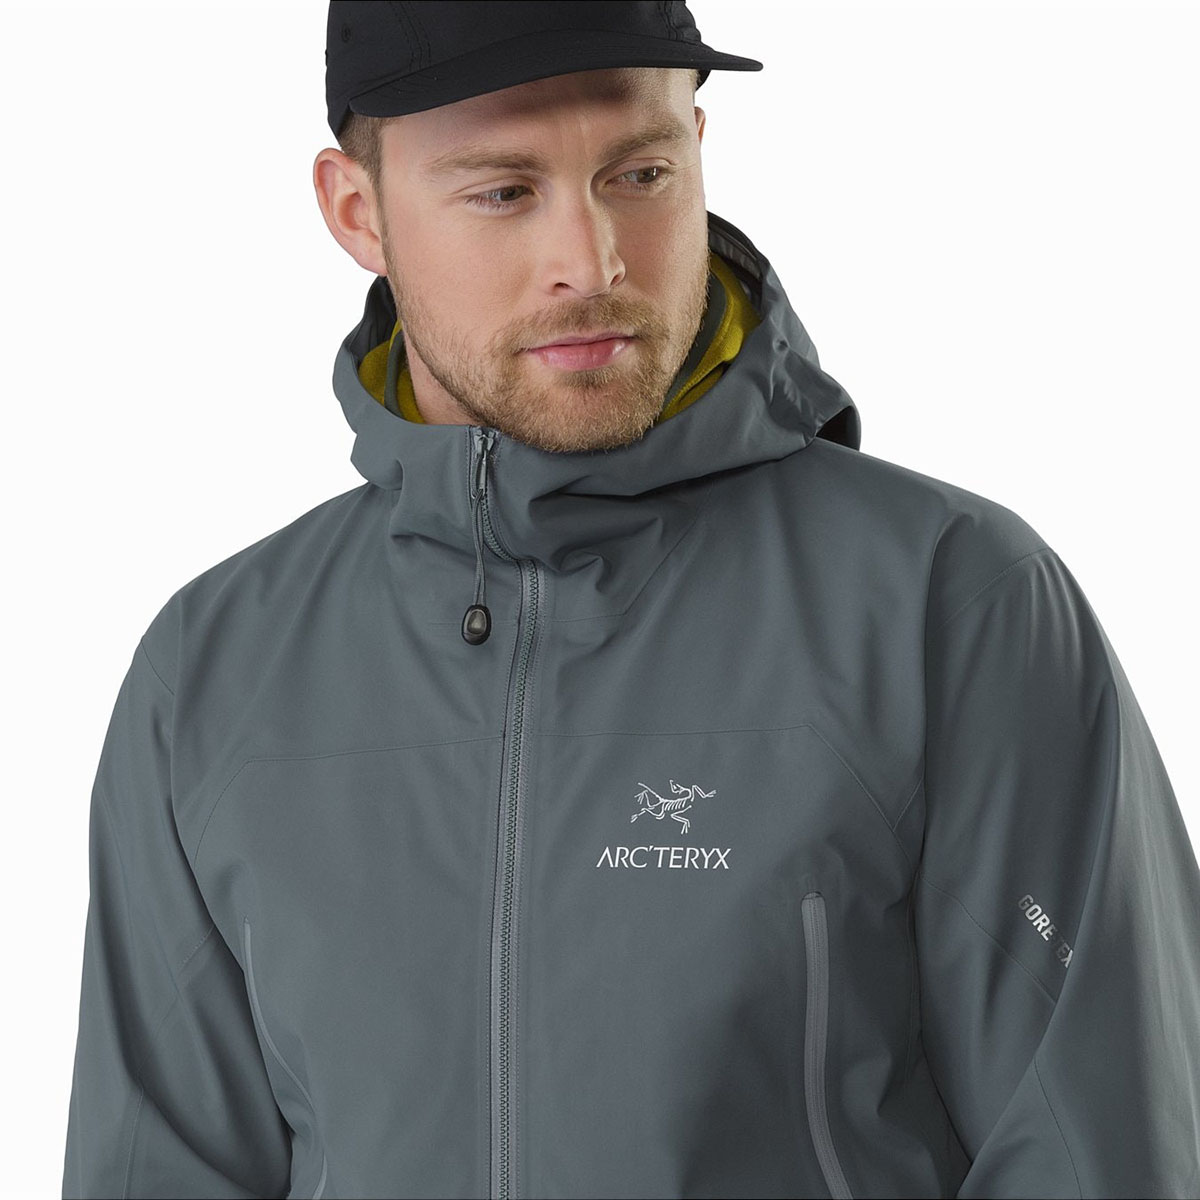 Arc'teryx Zeta AR Jacket, men's, discontinued Spring 2019 colors (free ...